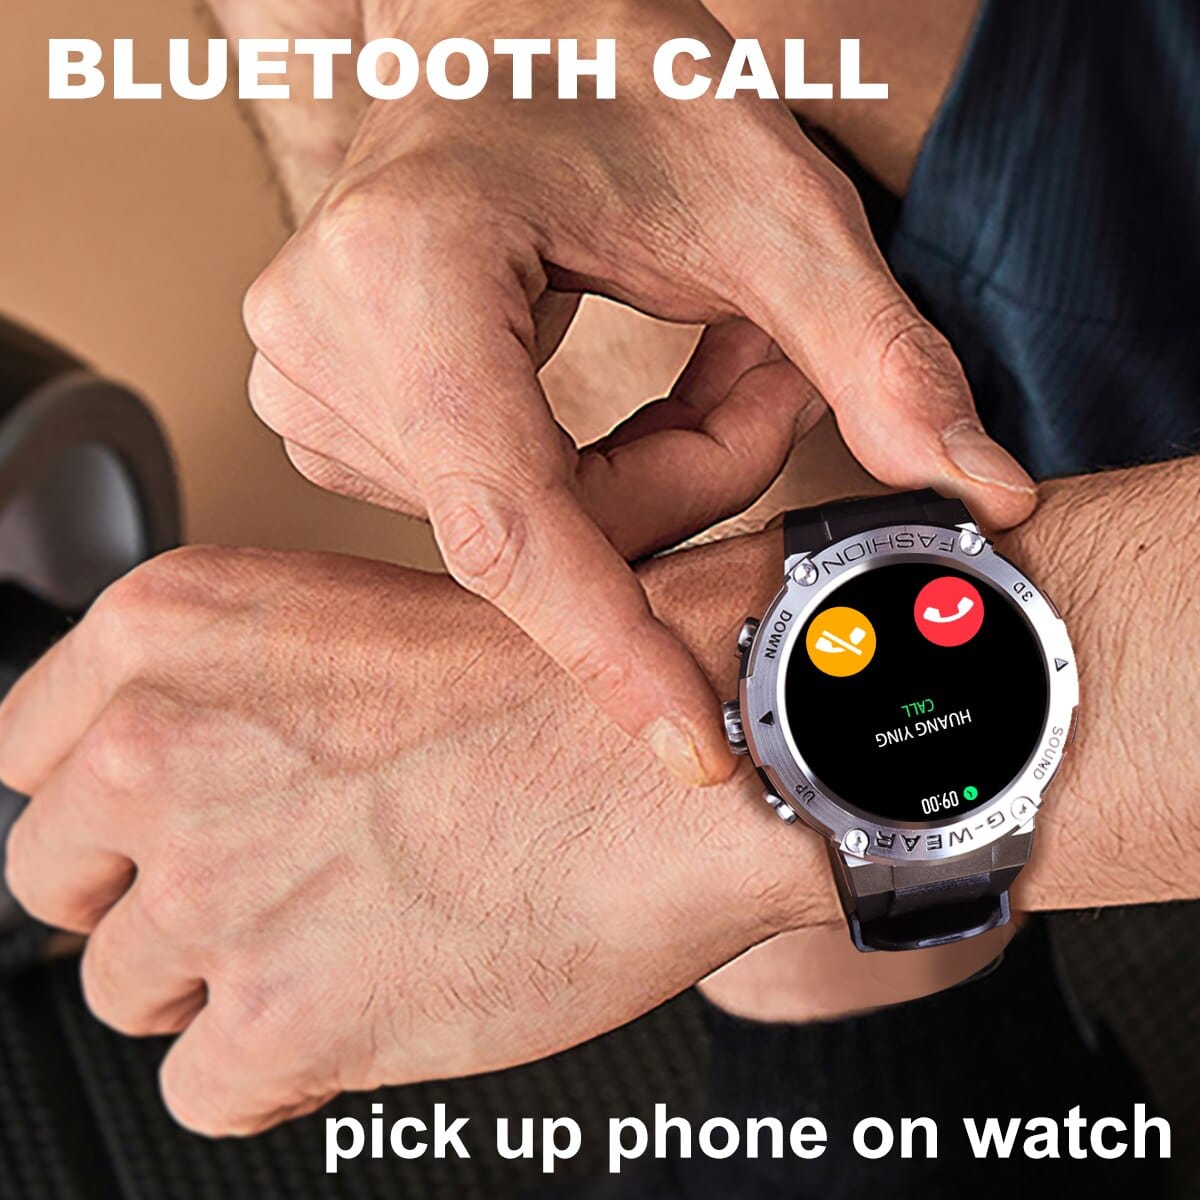 Smart Watch 360 * 360 Resolution IPS Bluetooth